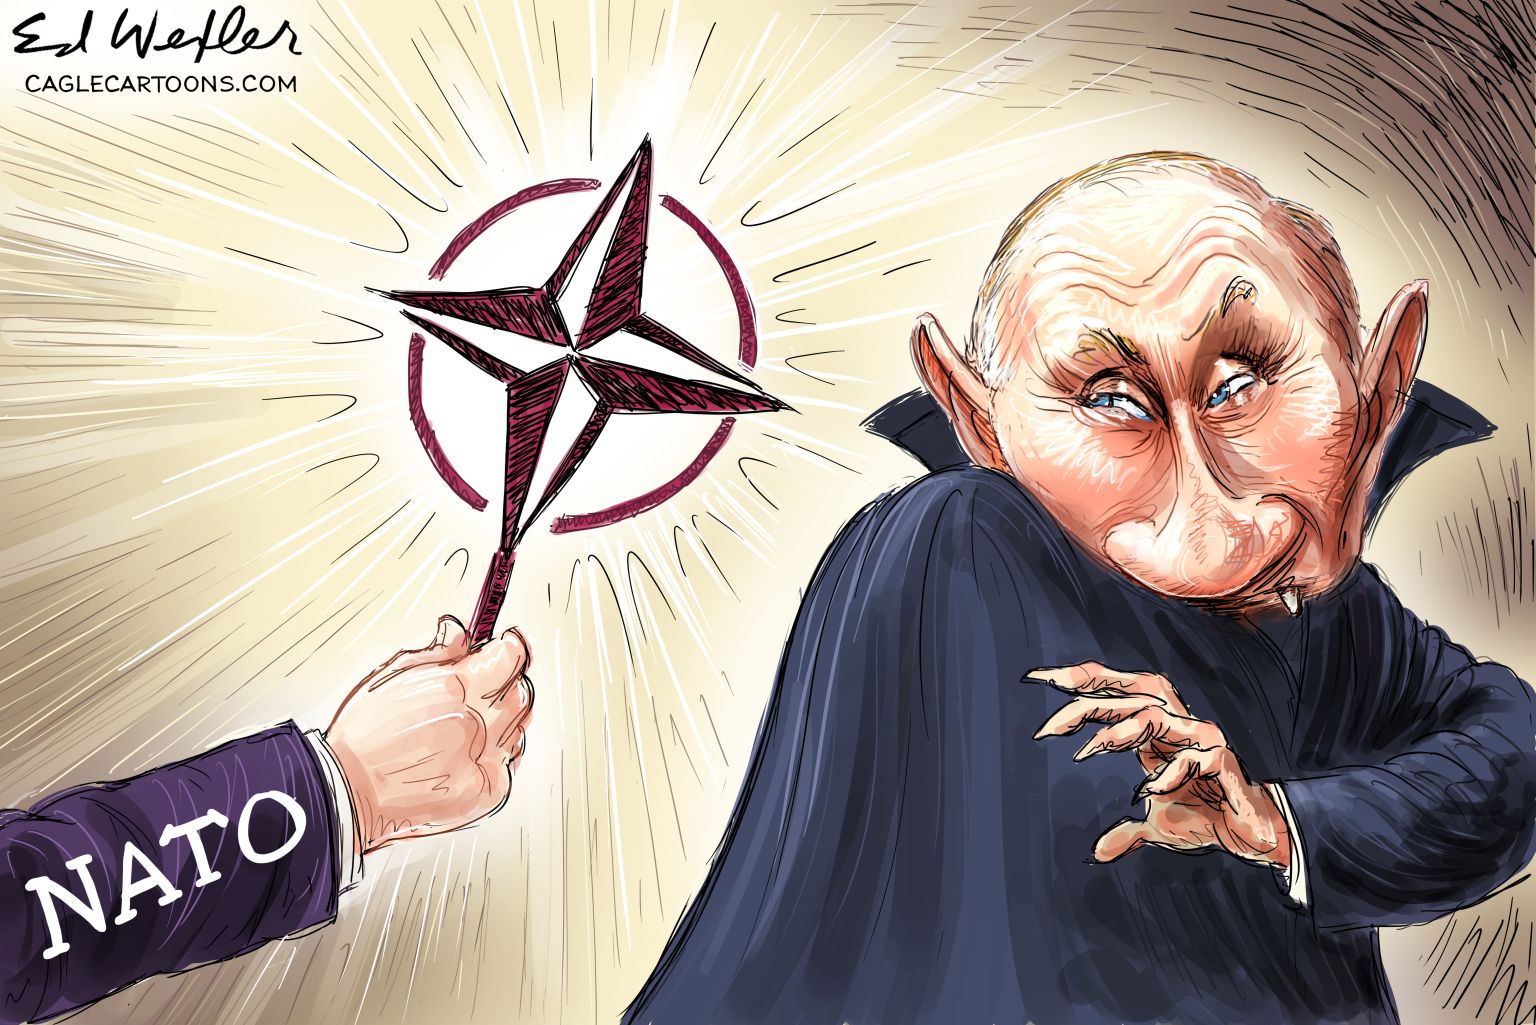 NATO Putin Vampire - News JustIN Political Cartoon - newsjustin.press